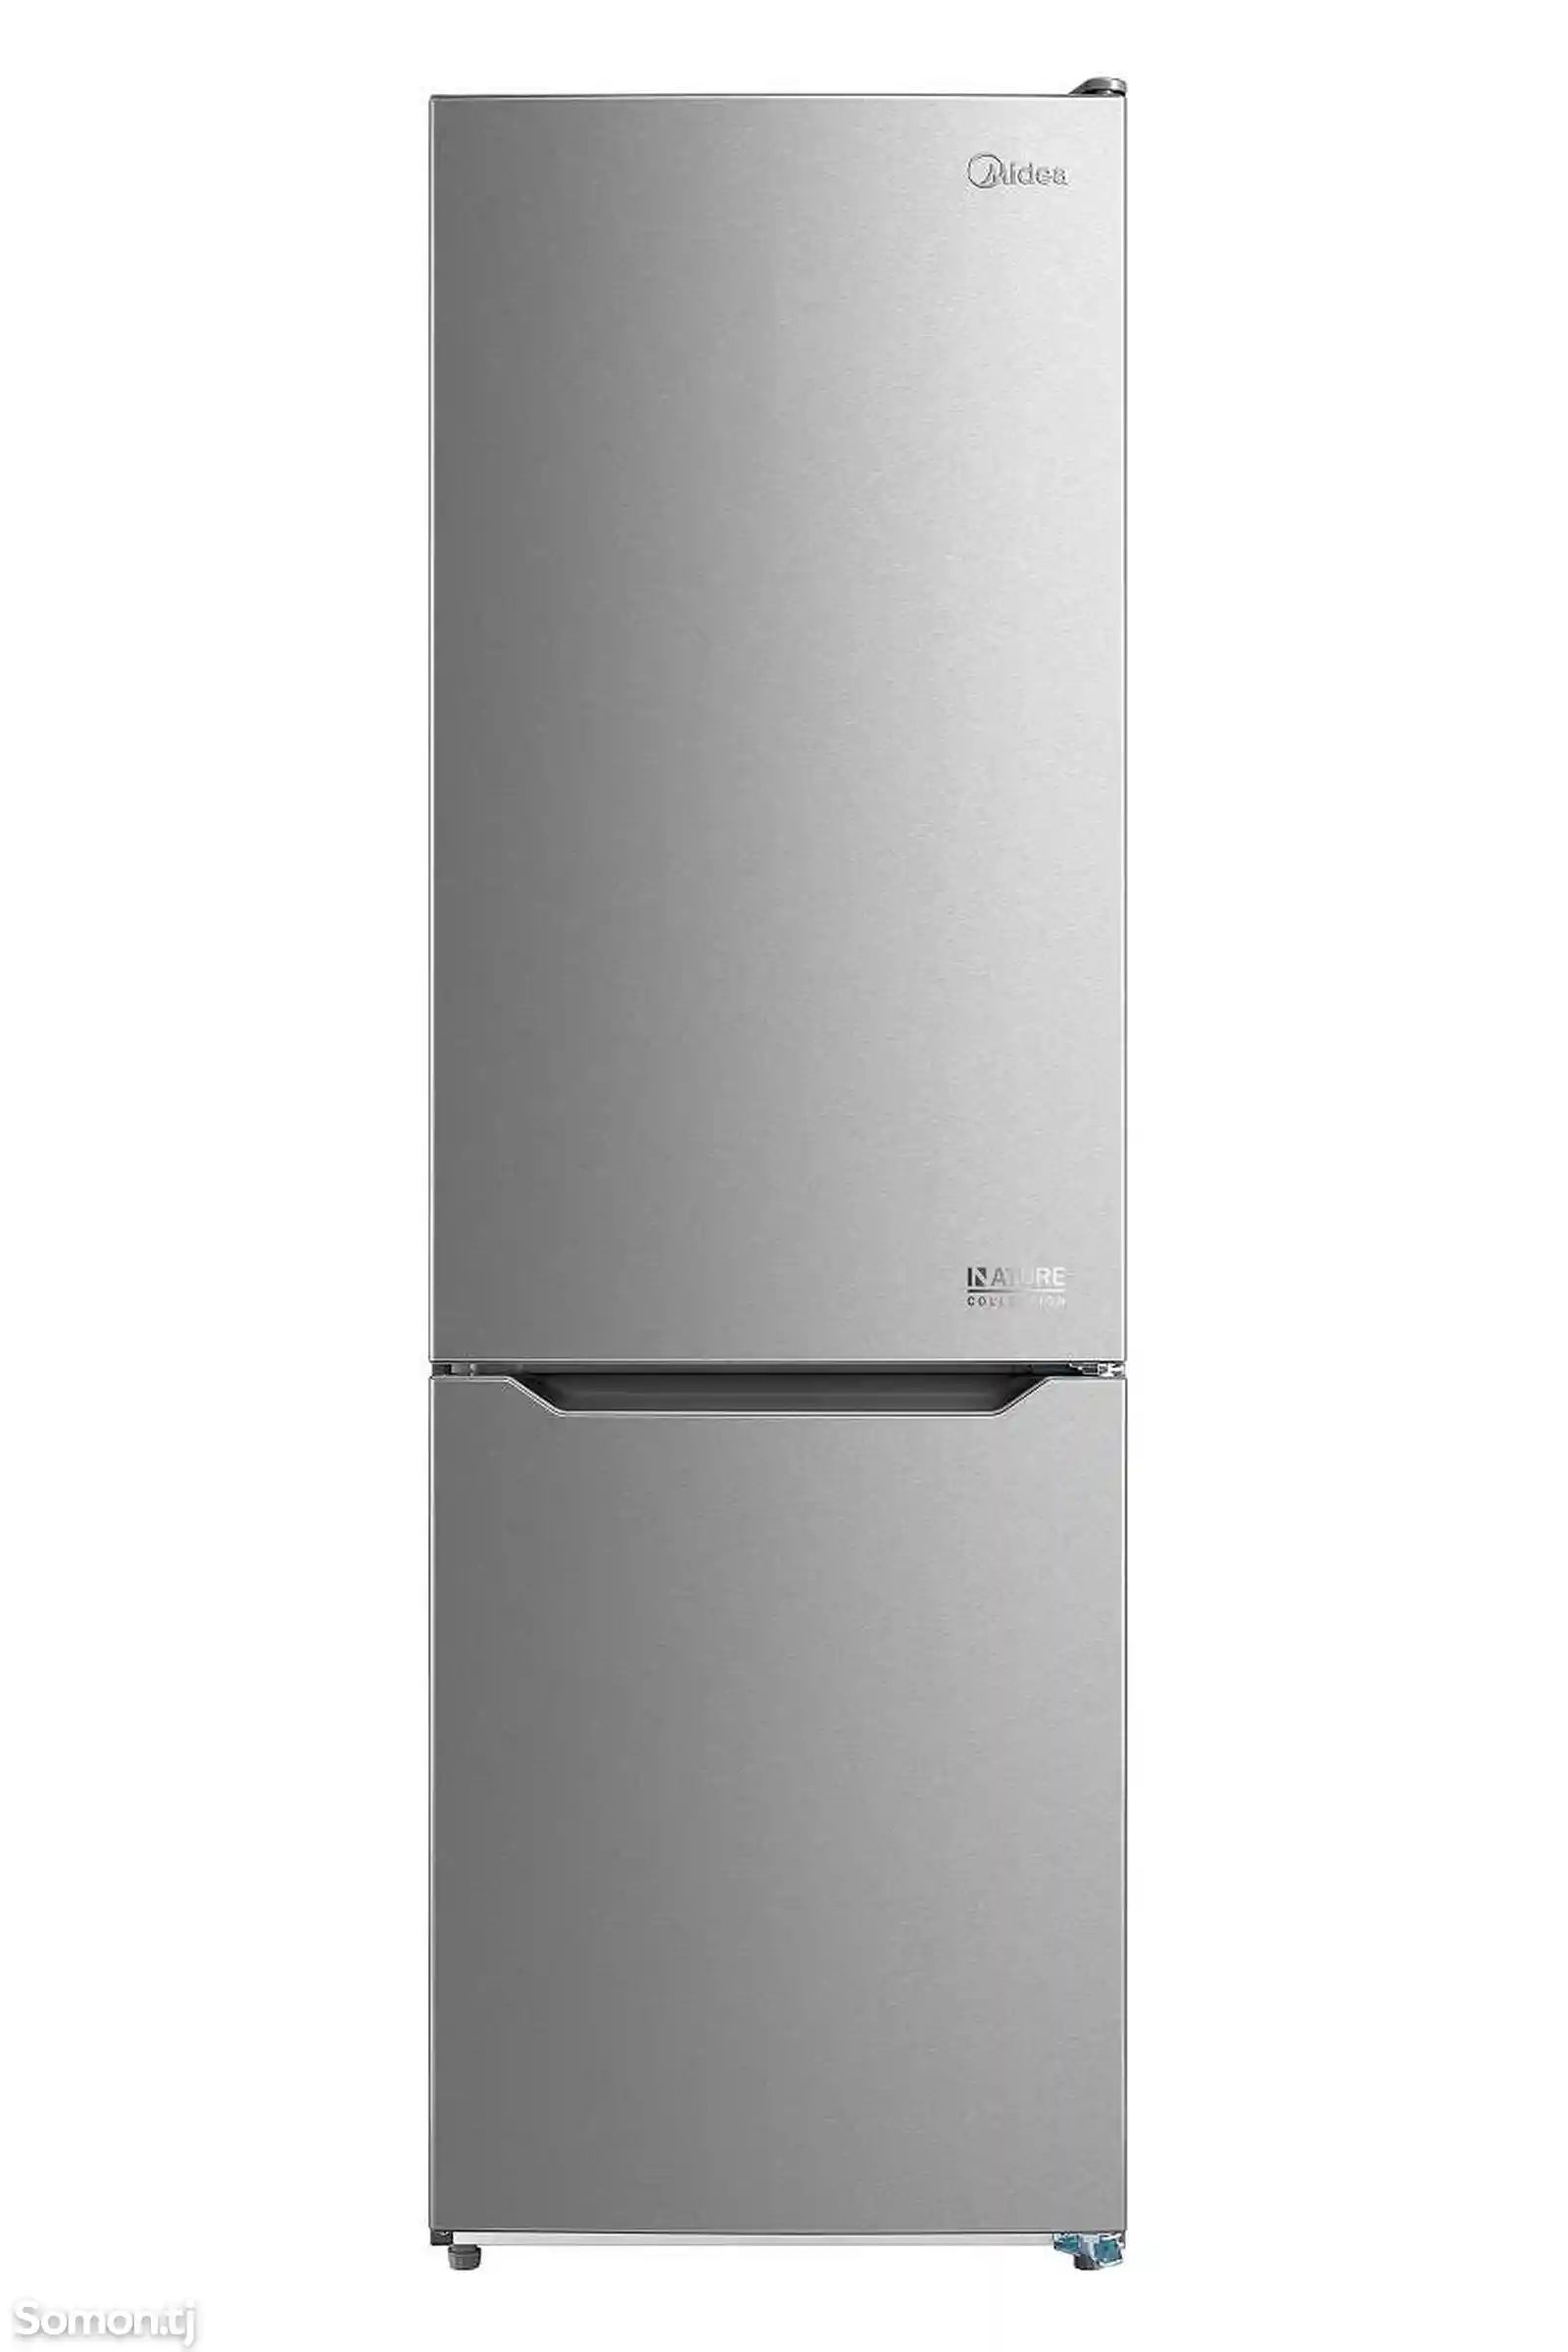 Холодильник Midea Mdrb424fgf02I серебристый